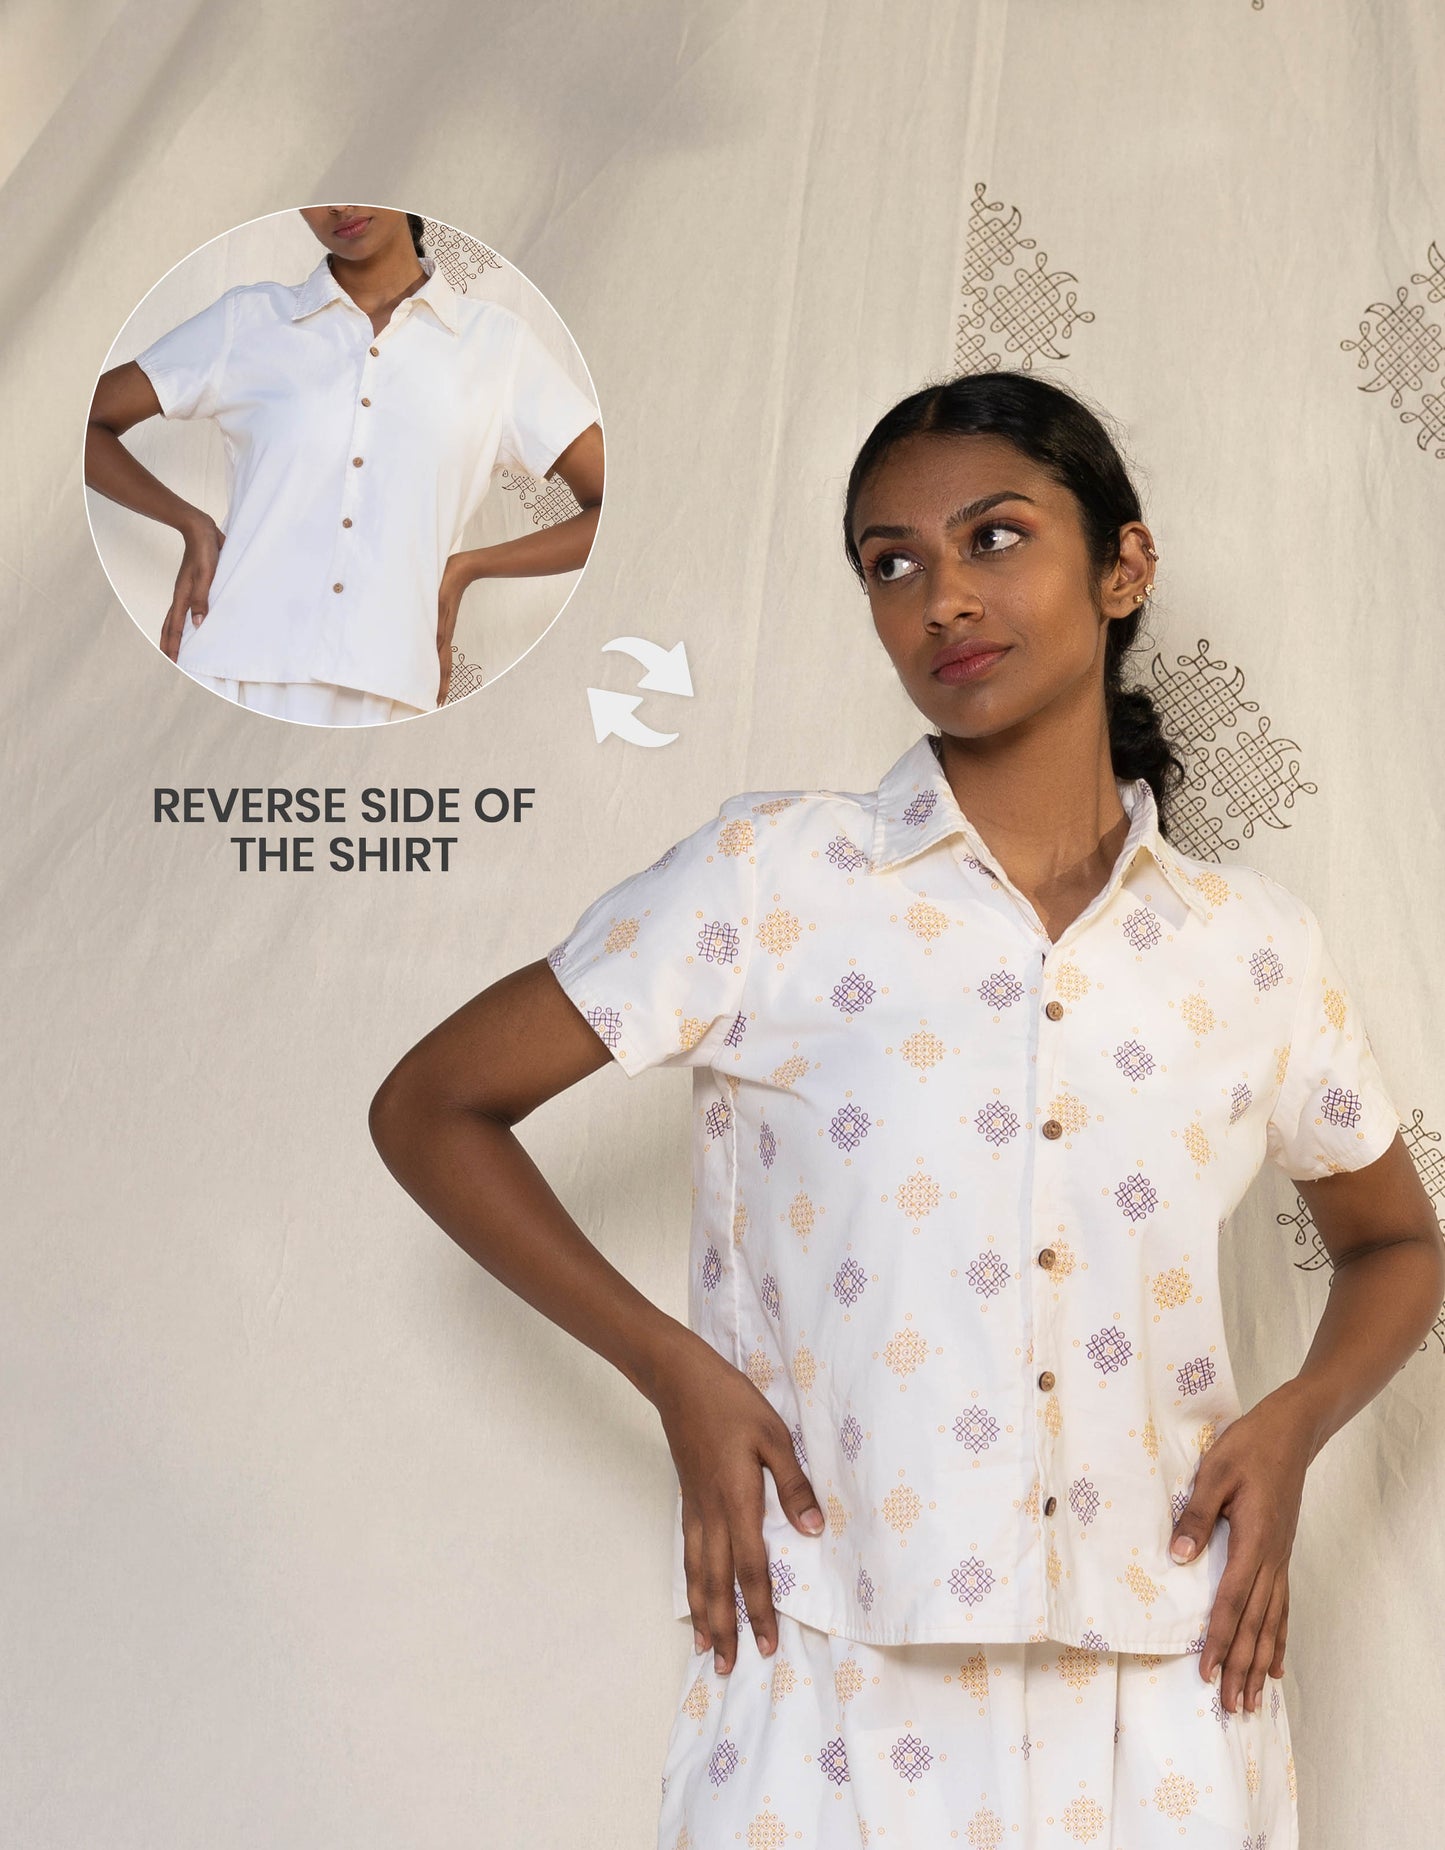 Front view of Hueloom's Reversible Shirt in Off-White Kolam print showing versatile reversible option